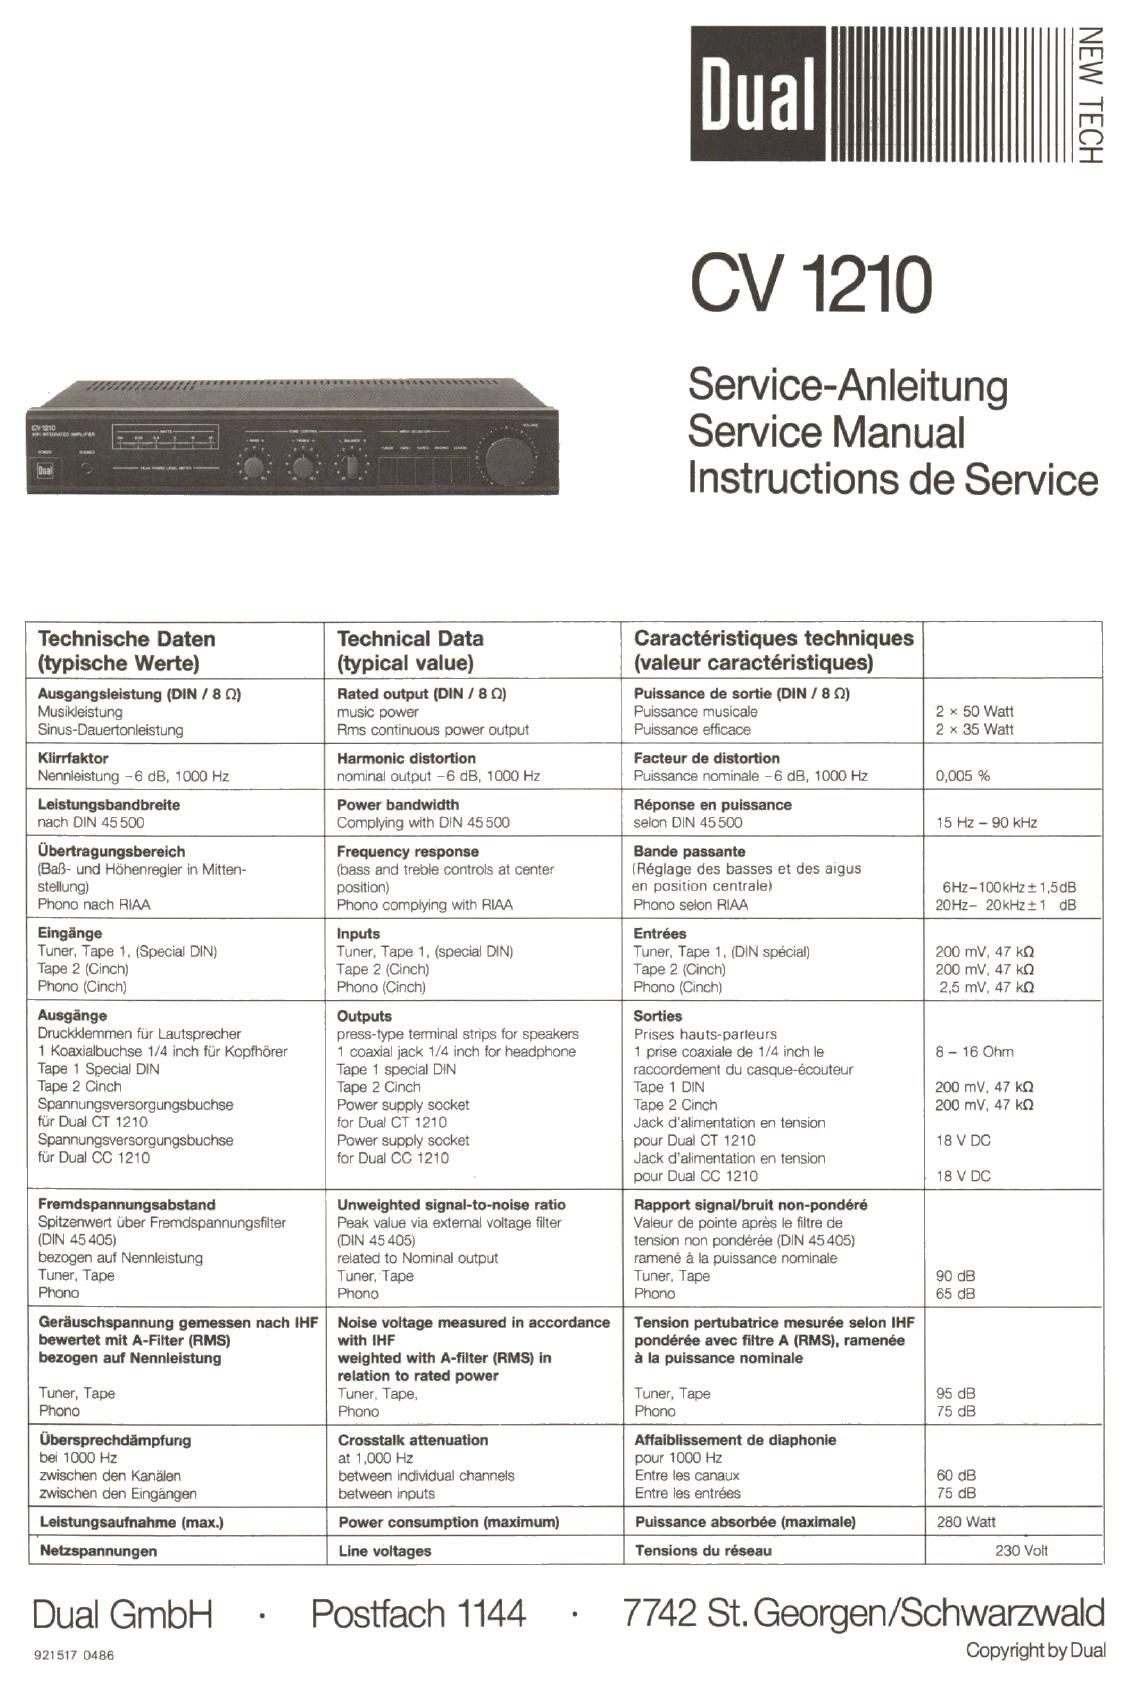 Dual CV 1210 Service Manual